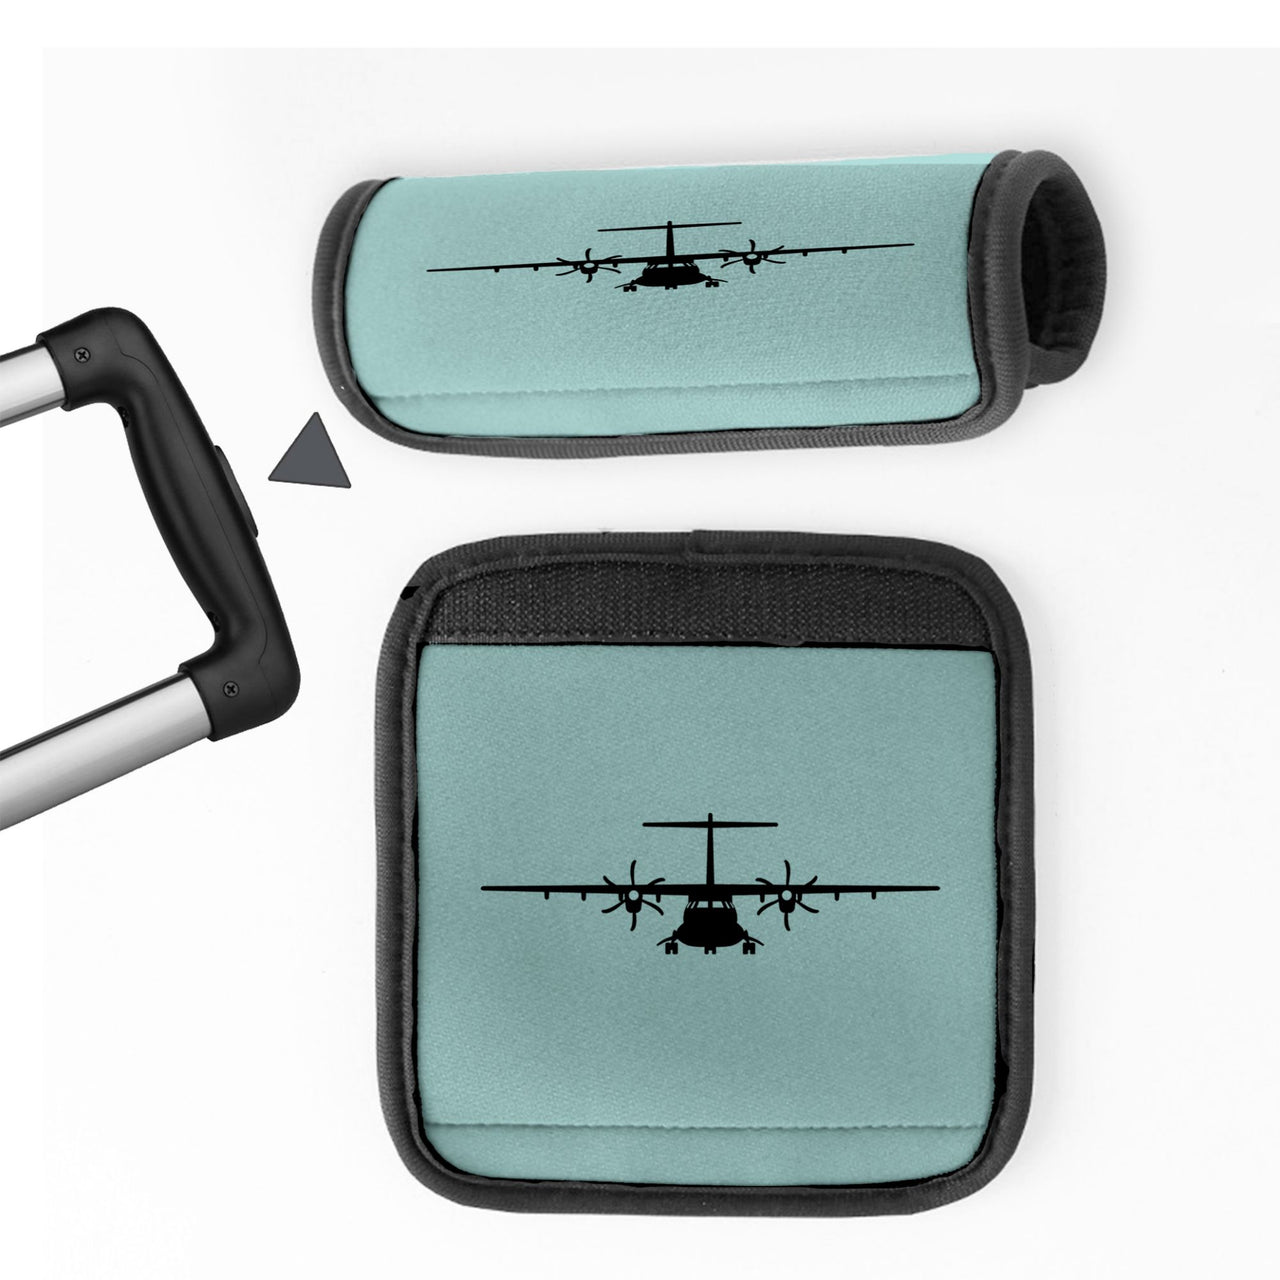 ATR-72 Silhouette Designed Neoprene Luggage Handle Covers